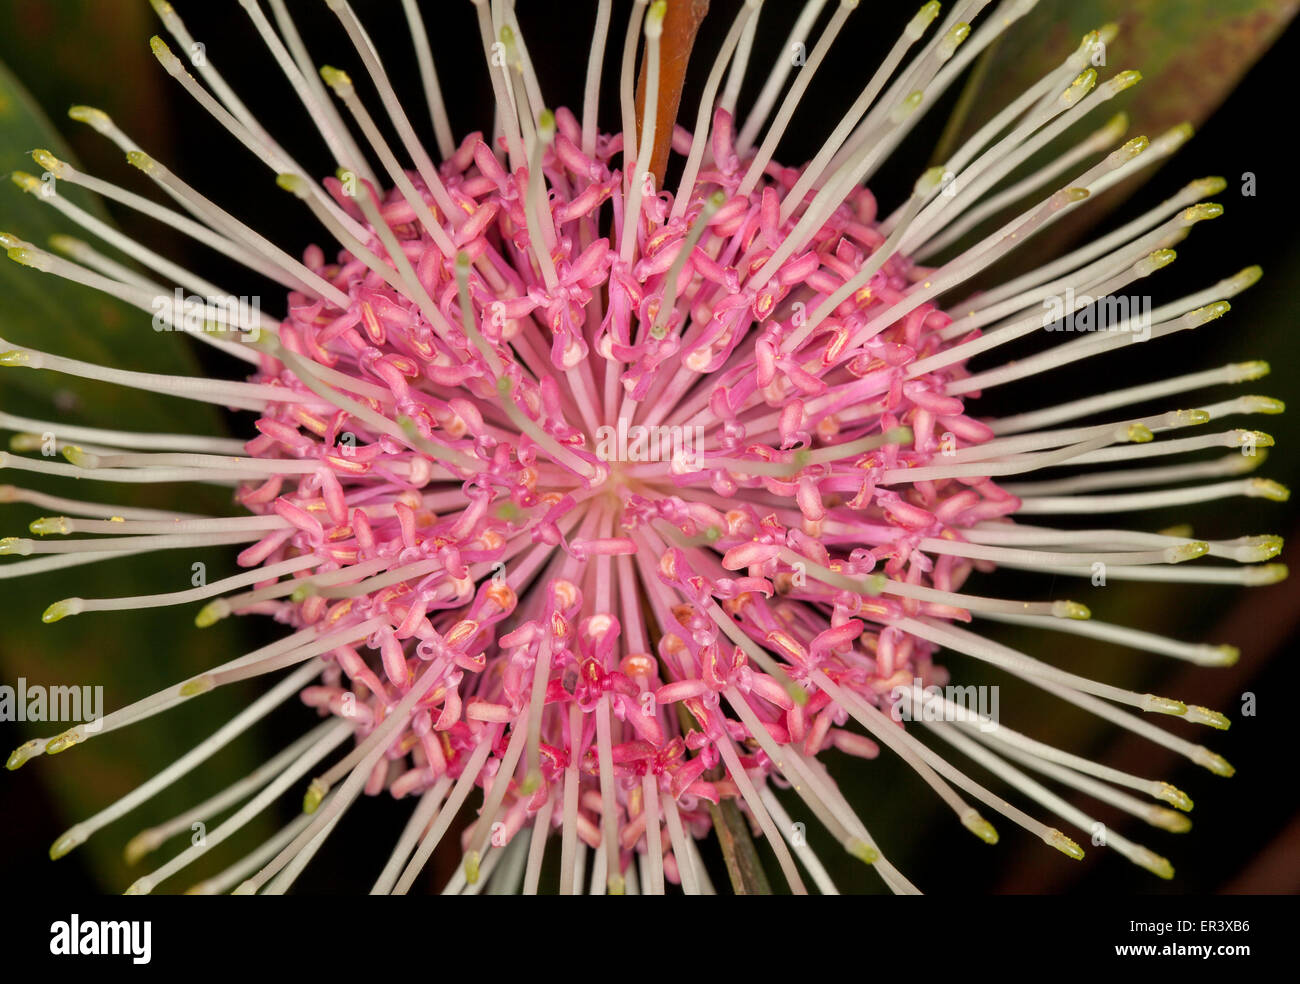 Close-up of unusual pink flower of Hakea laurina hybrid ' Stockdale Sensation' - pincushion flower, an Australian native plant on dark background Stock Photo